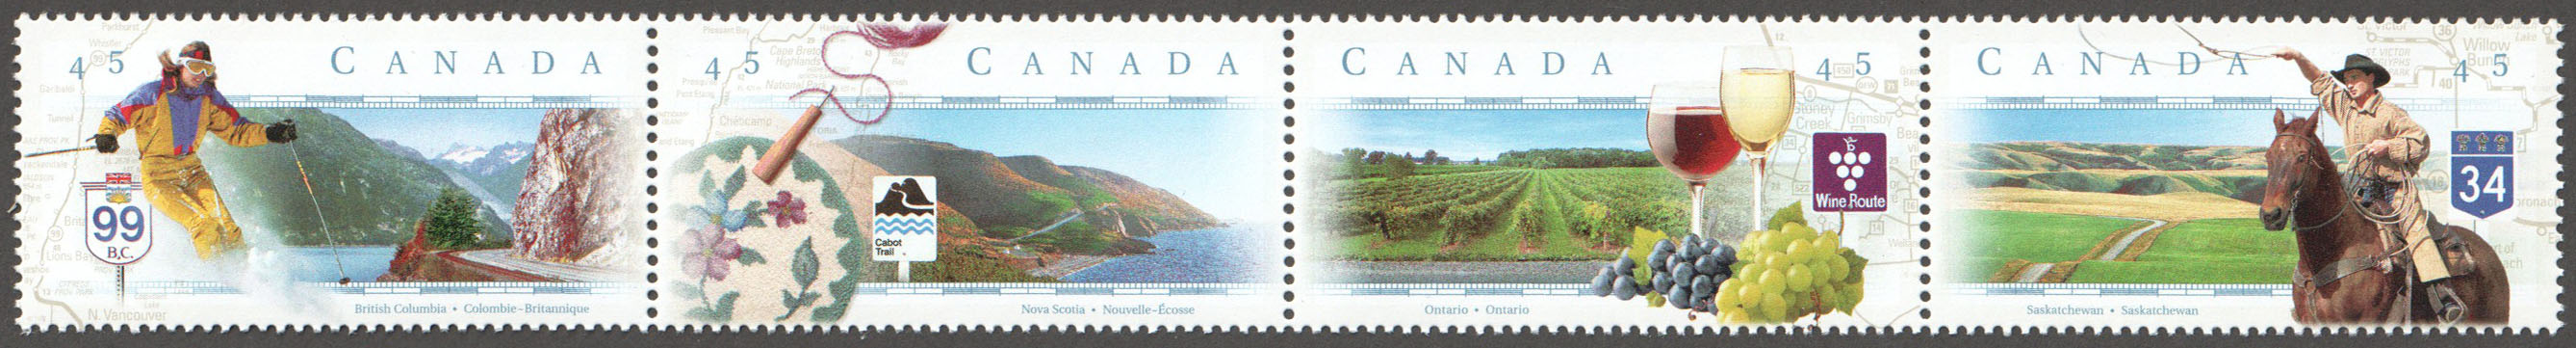 Canada Scott 1653a MNH Strip (A7-12) - Click Image to Close